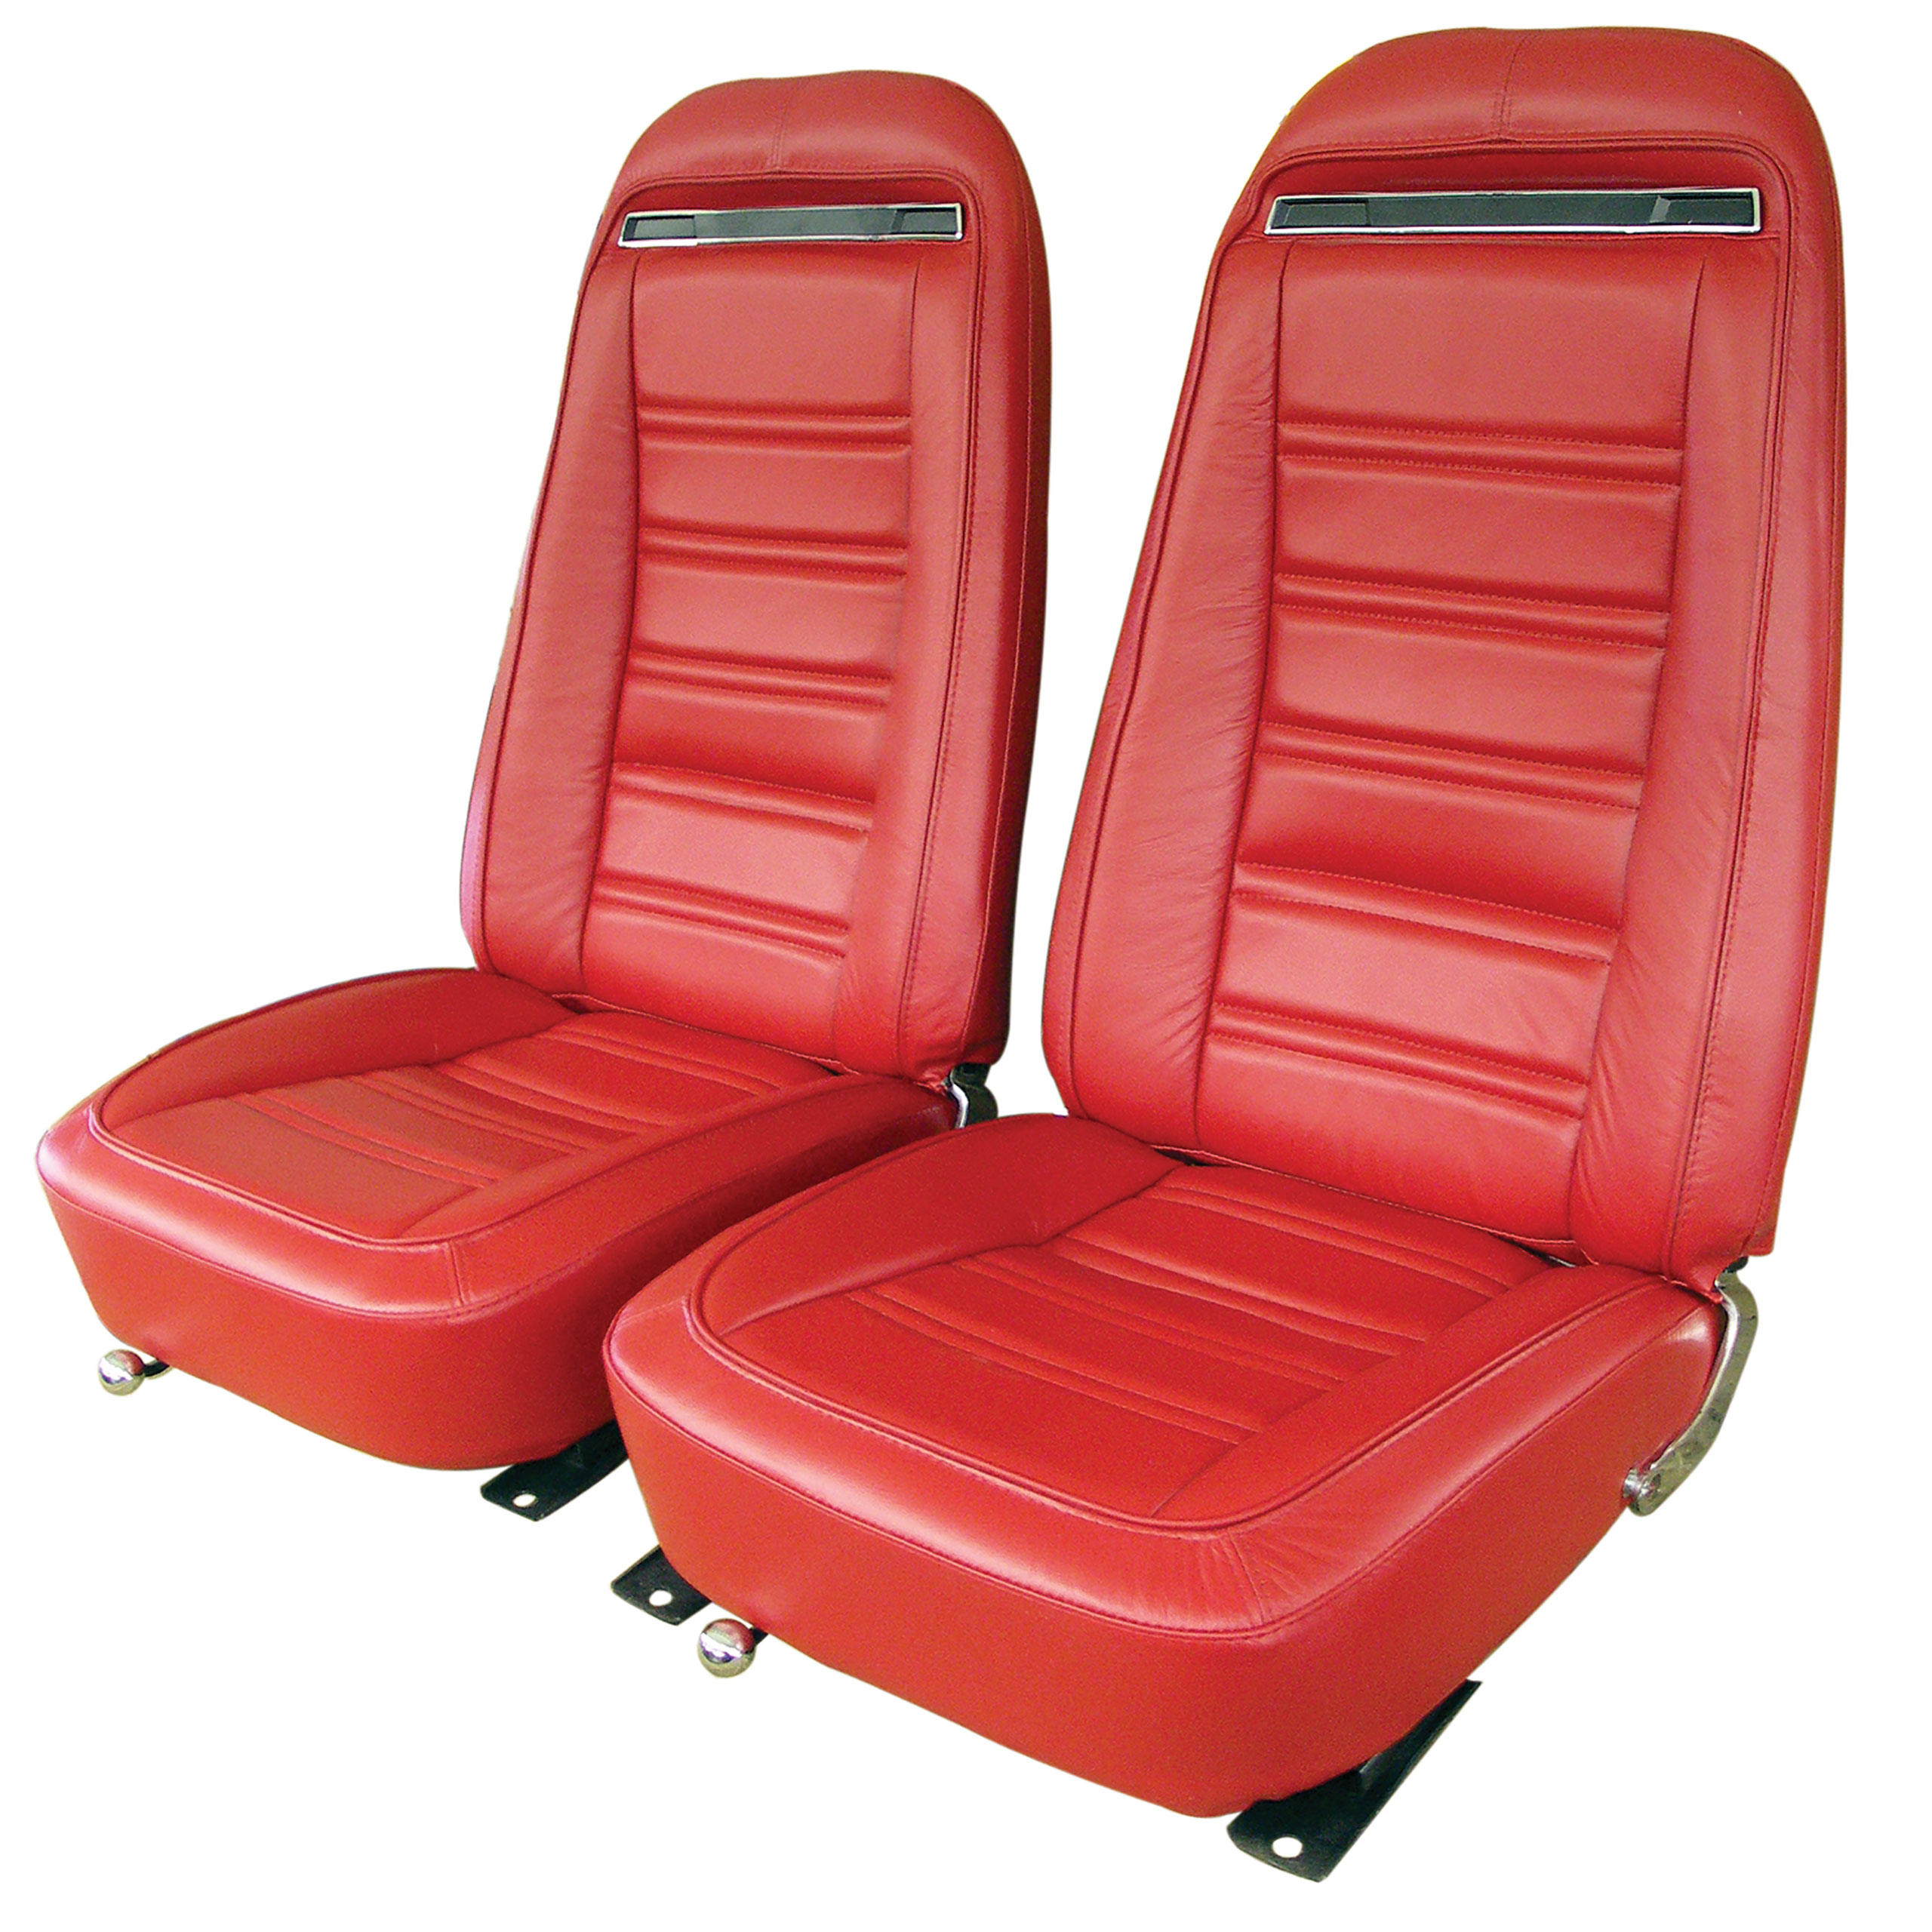 1972 Corvette C3 Leather Seat Covers Red Leather/Vinyl Original CA-419230 